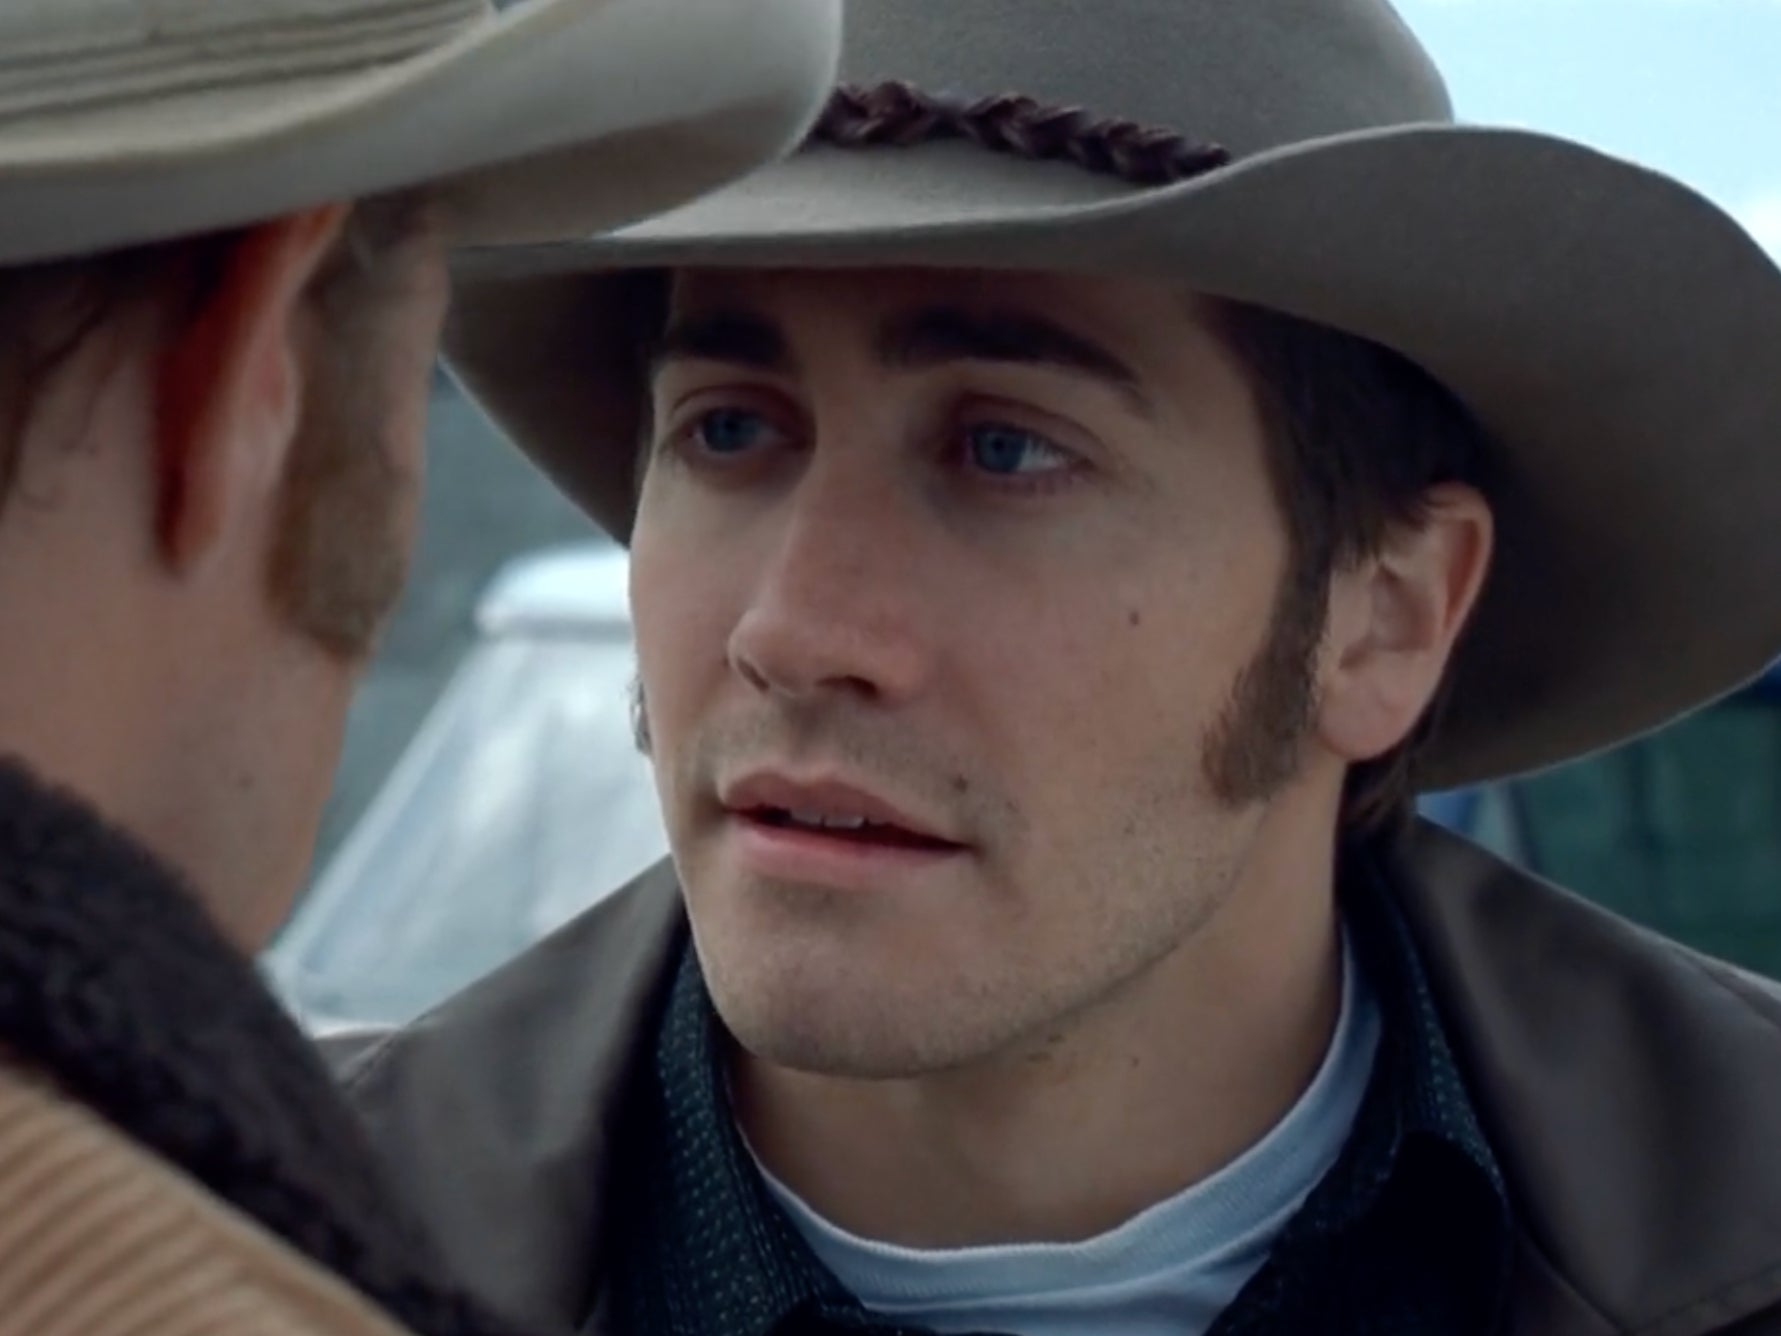 Jake Gyllenhaal in ‘Brokeback Mountain’, which is leaving Netflix